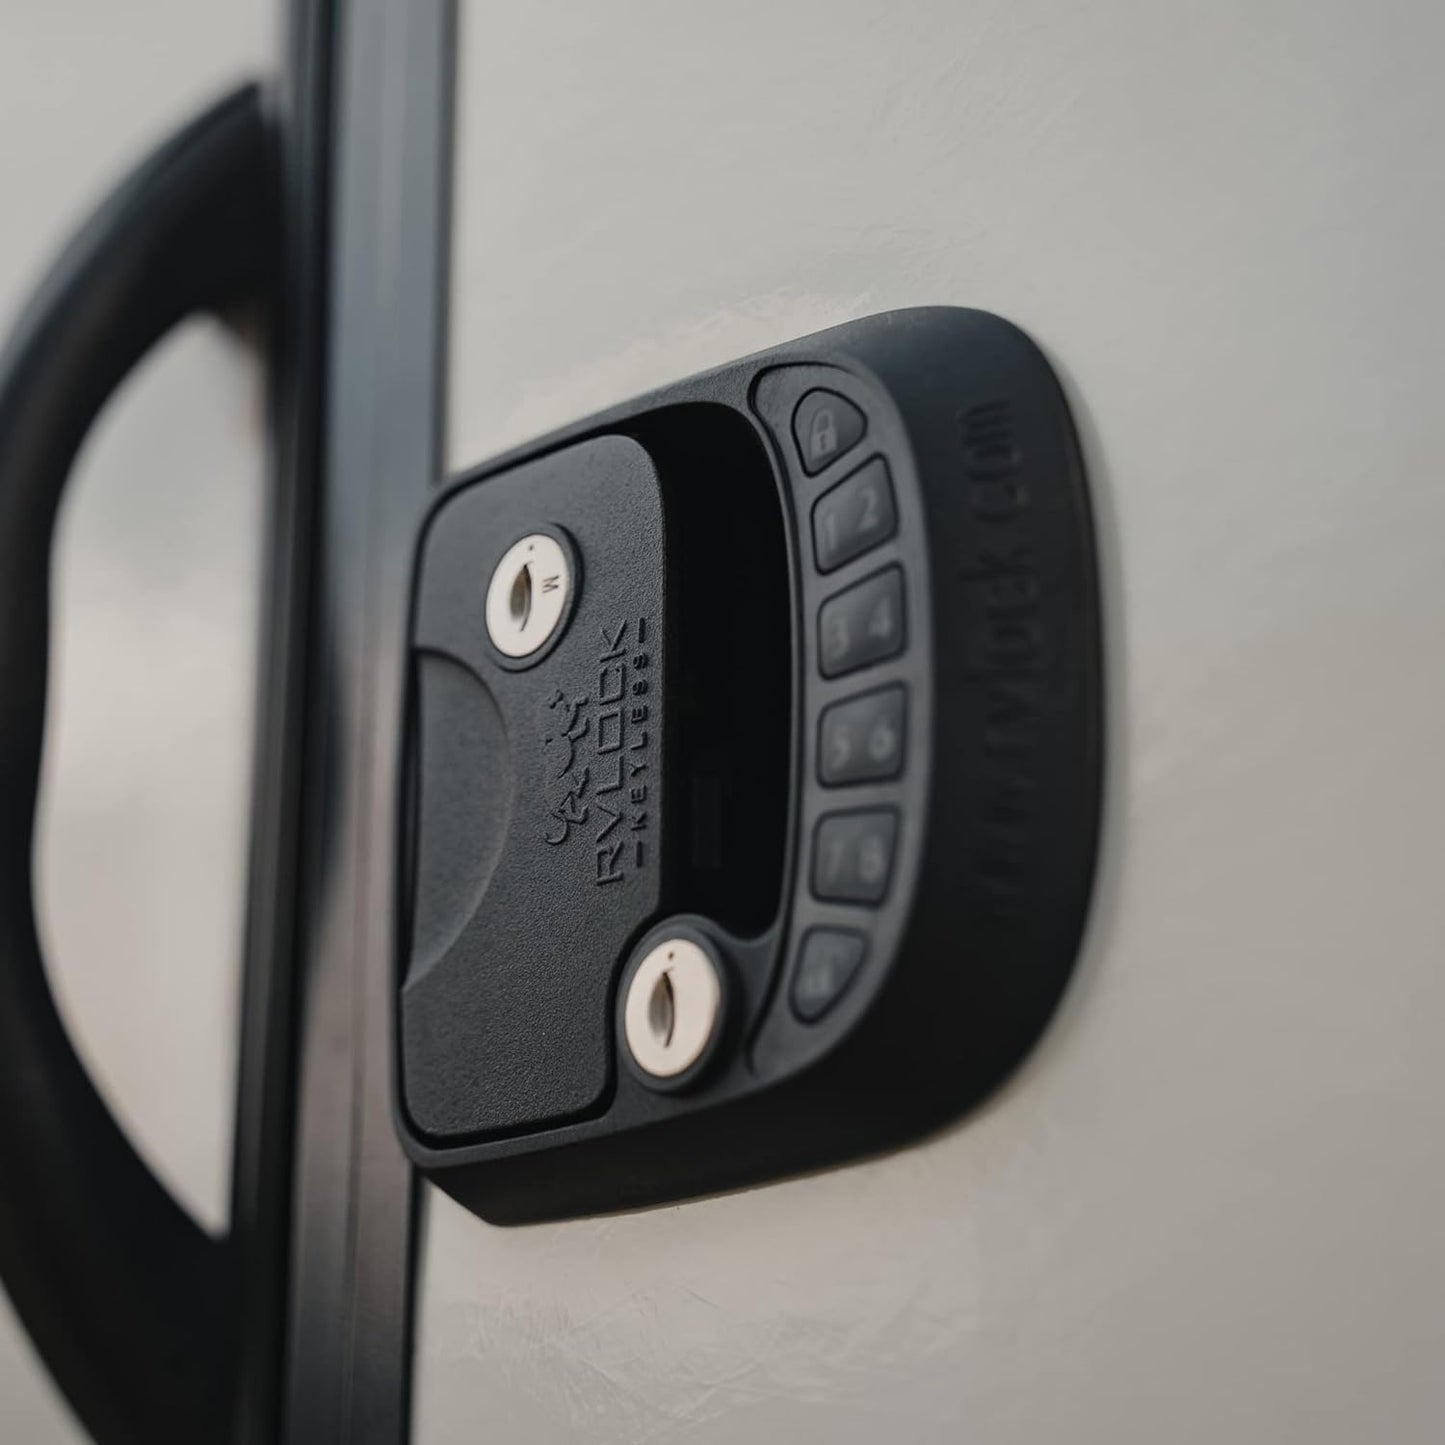 Compact and Key Fob Keyless Entry Keypad, RV/5th Wheel Lock Accessories